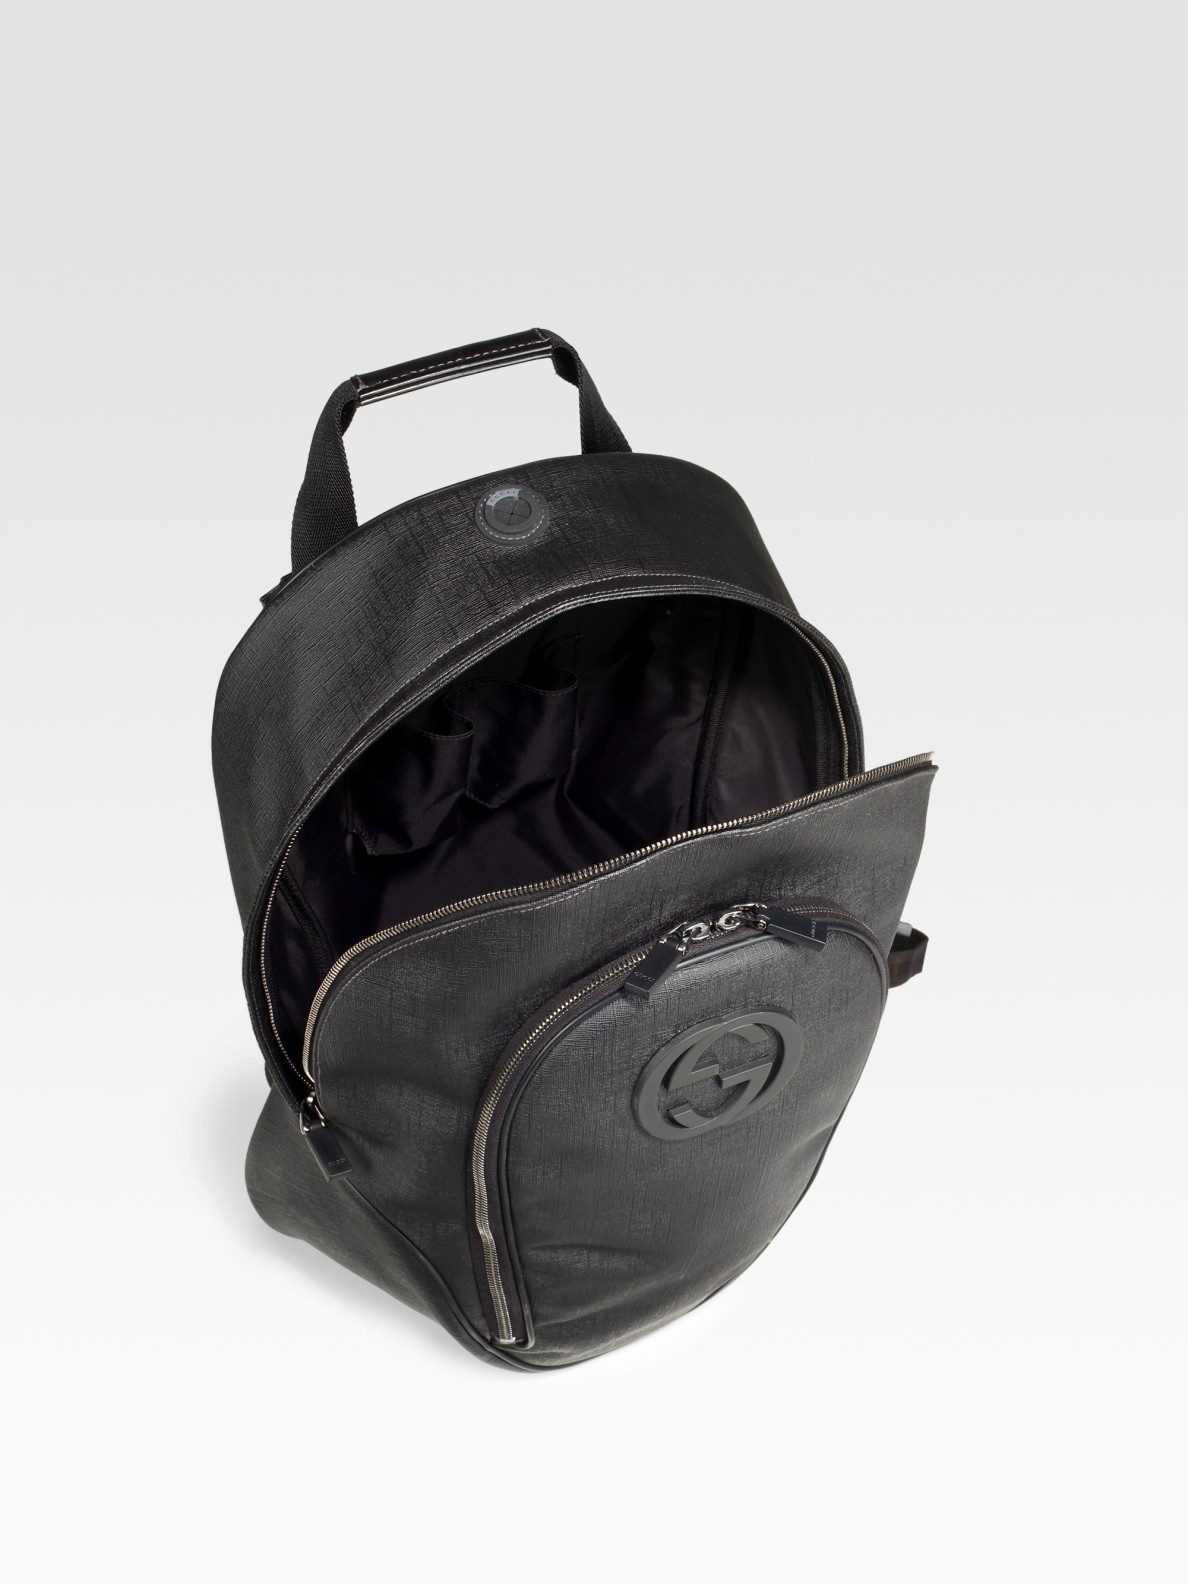 Lyst - Gucci Black Plus Backpack in Black for Men